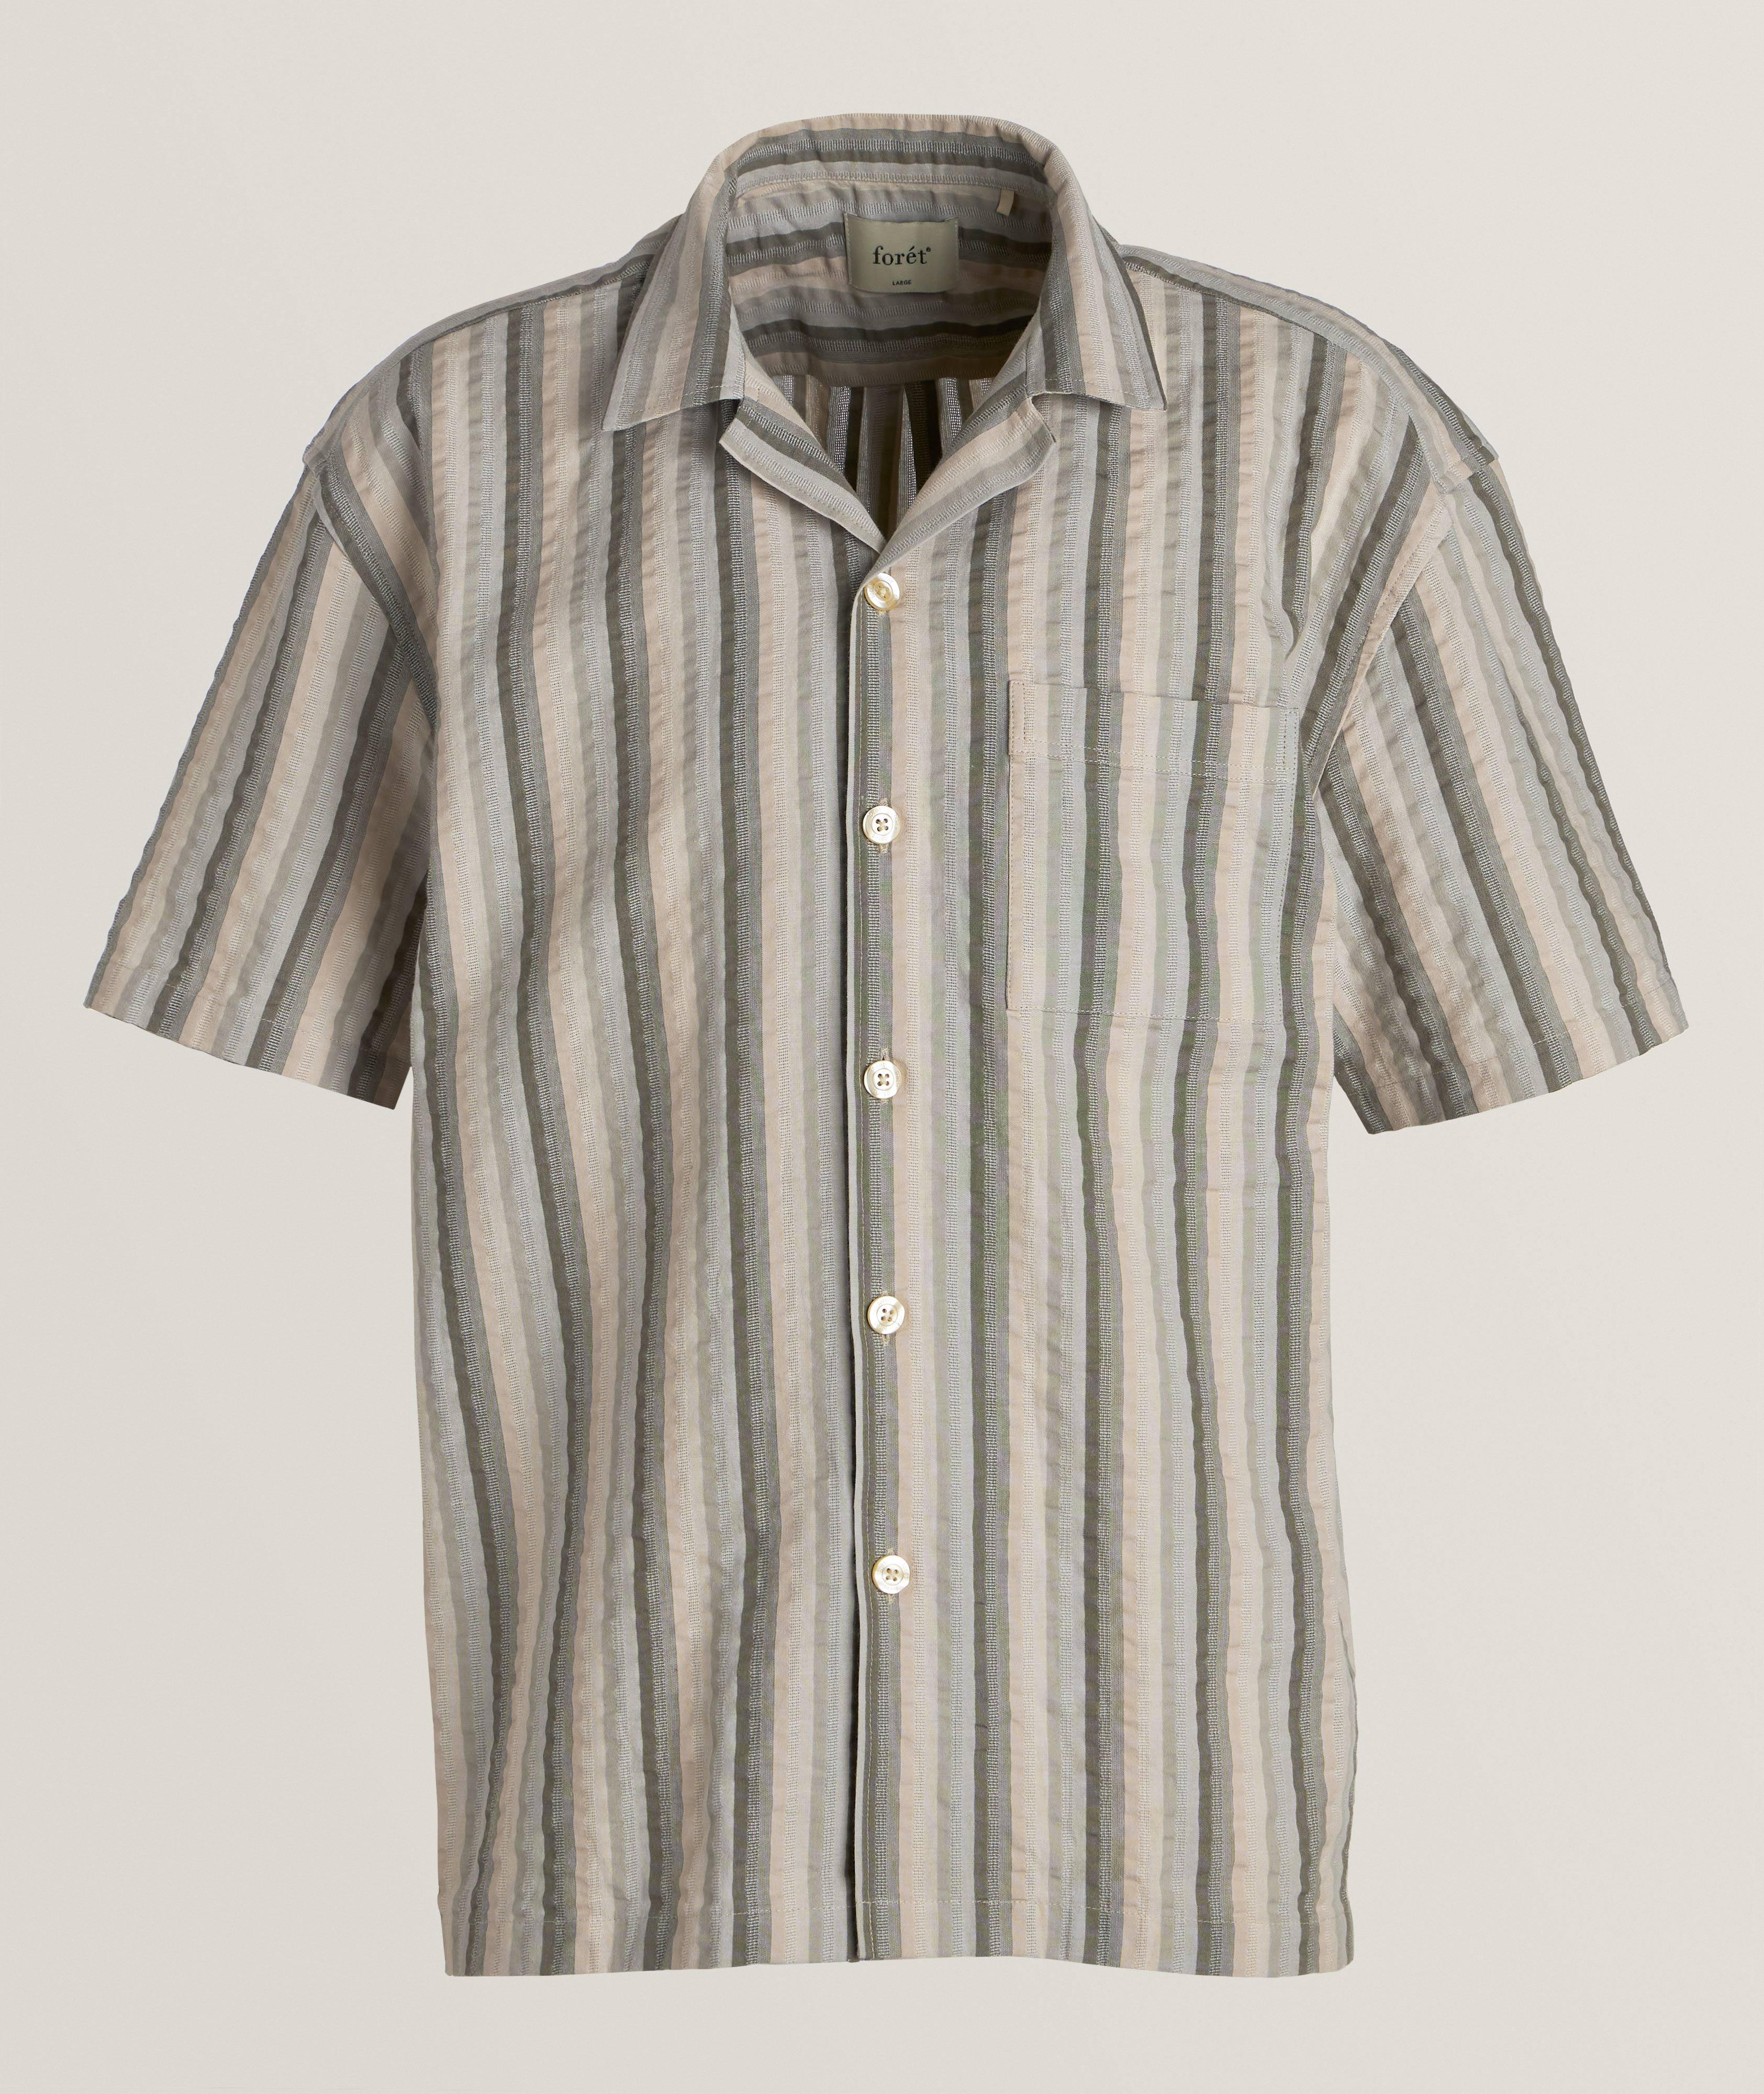 Foret Striped Seersucker Camp Shirt